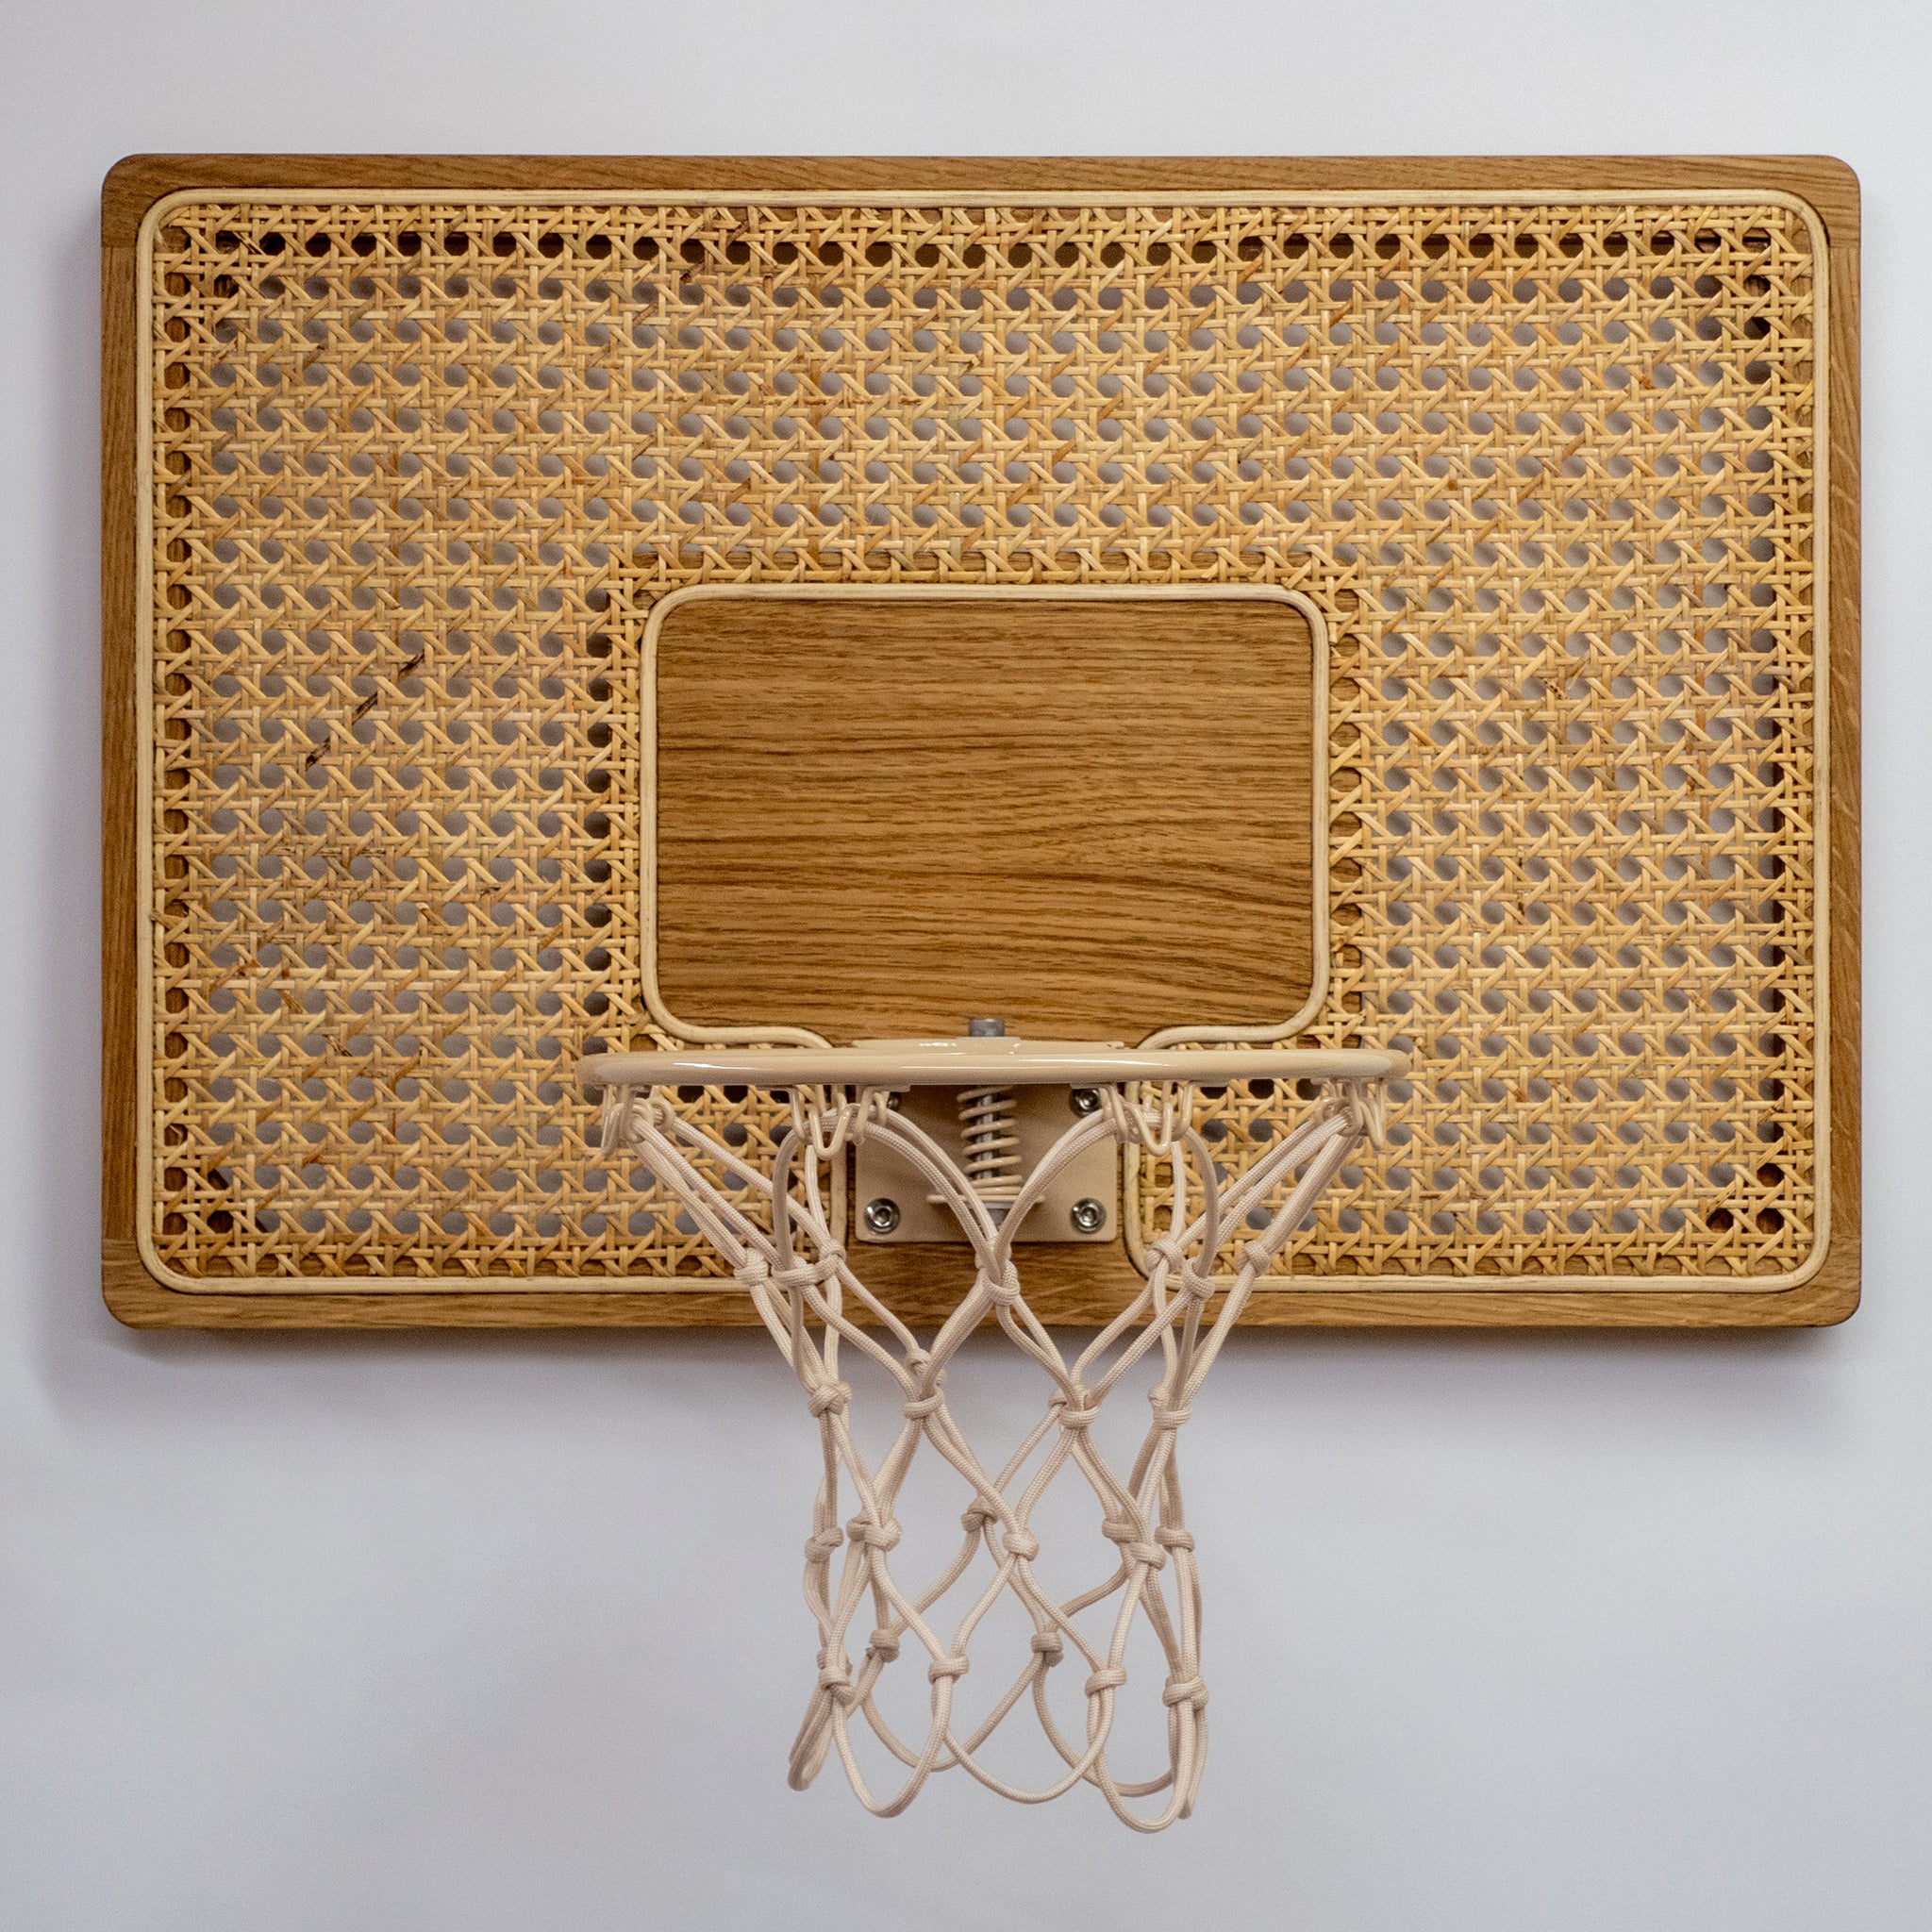 hand made wall mounted mini basketball hoop made with rattan